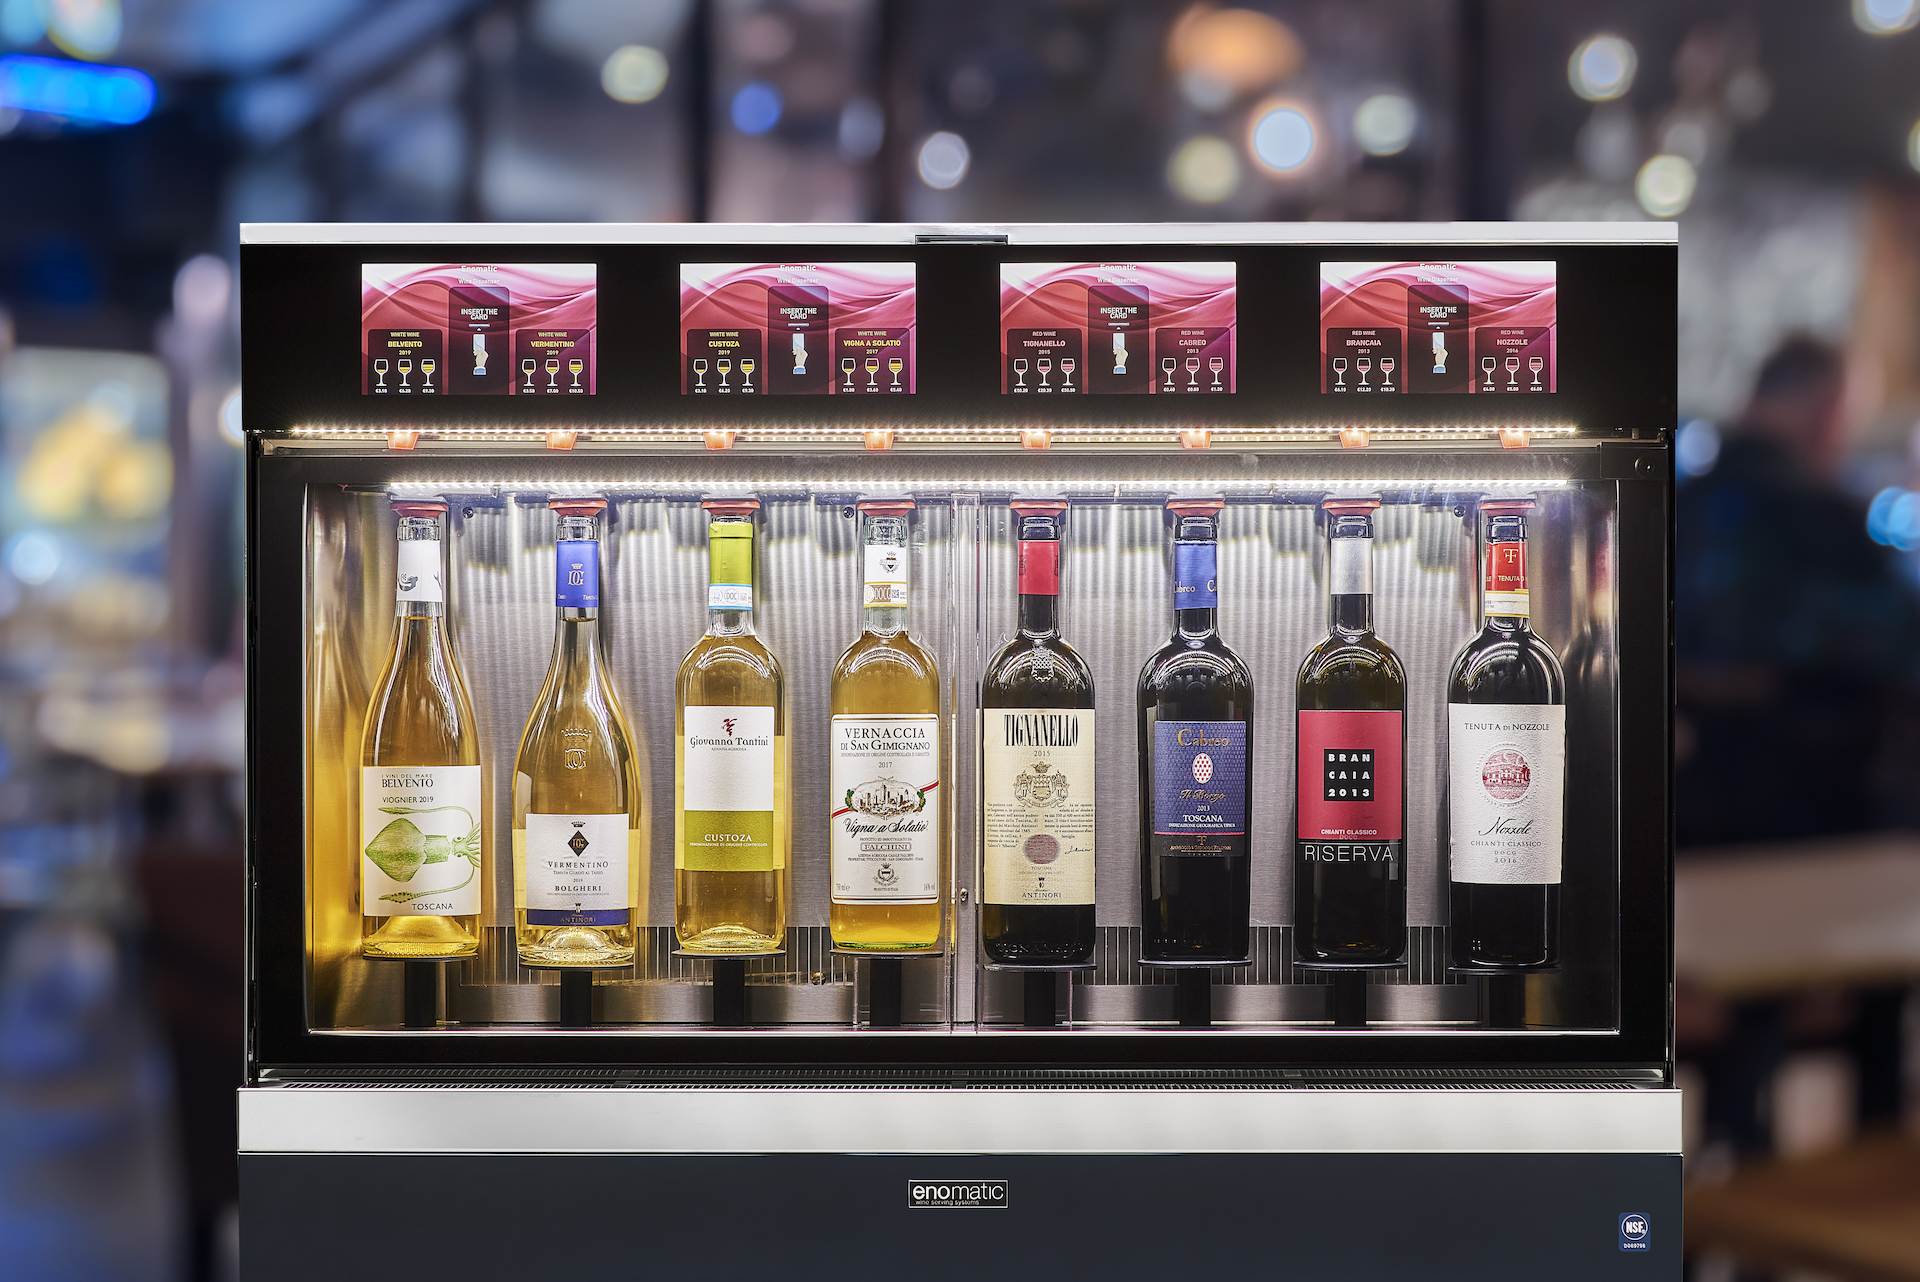 Enomatic wine dispenser Unica 8-Bottle introduction